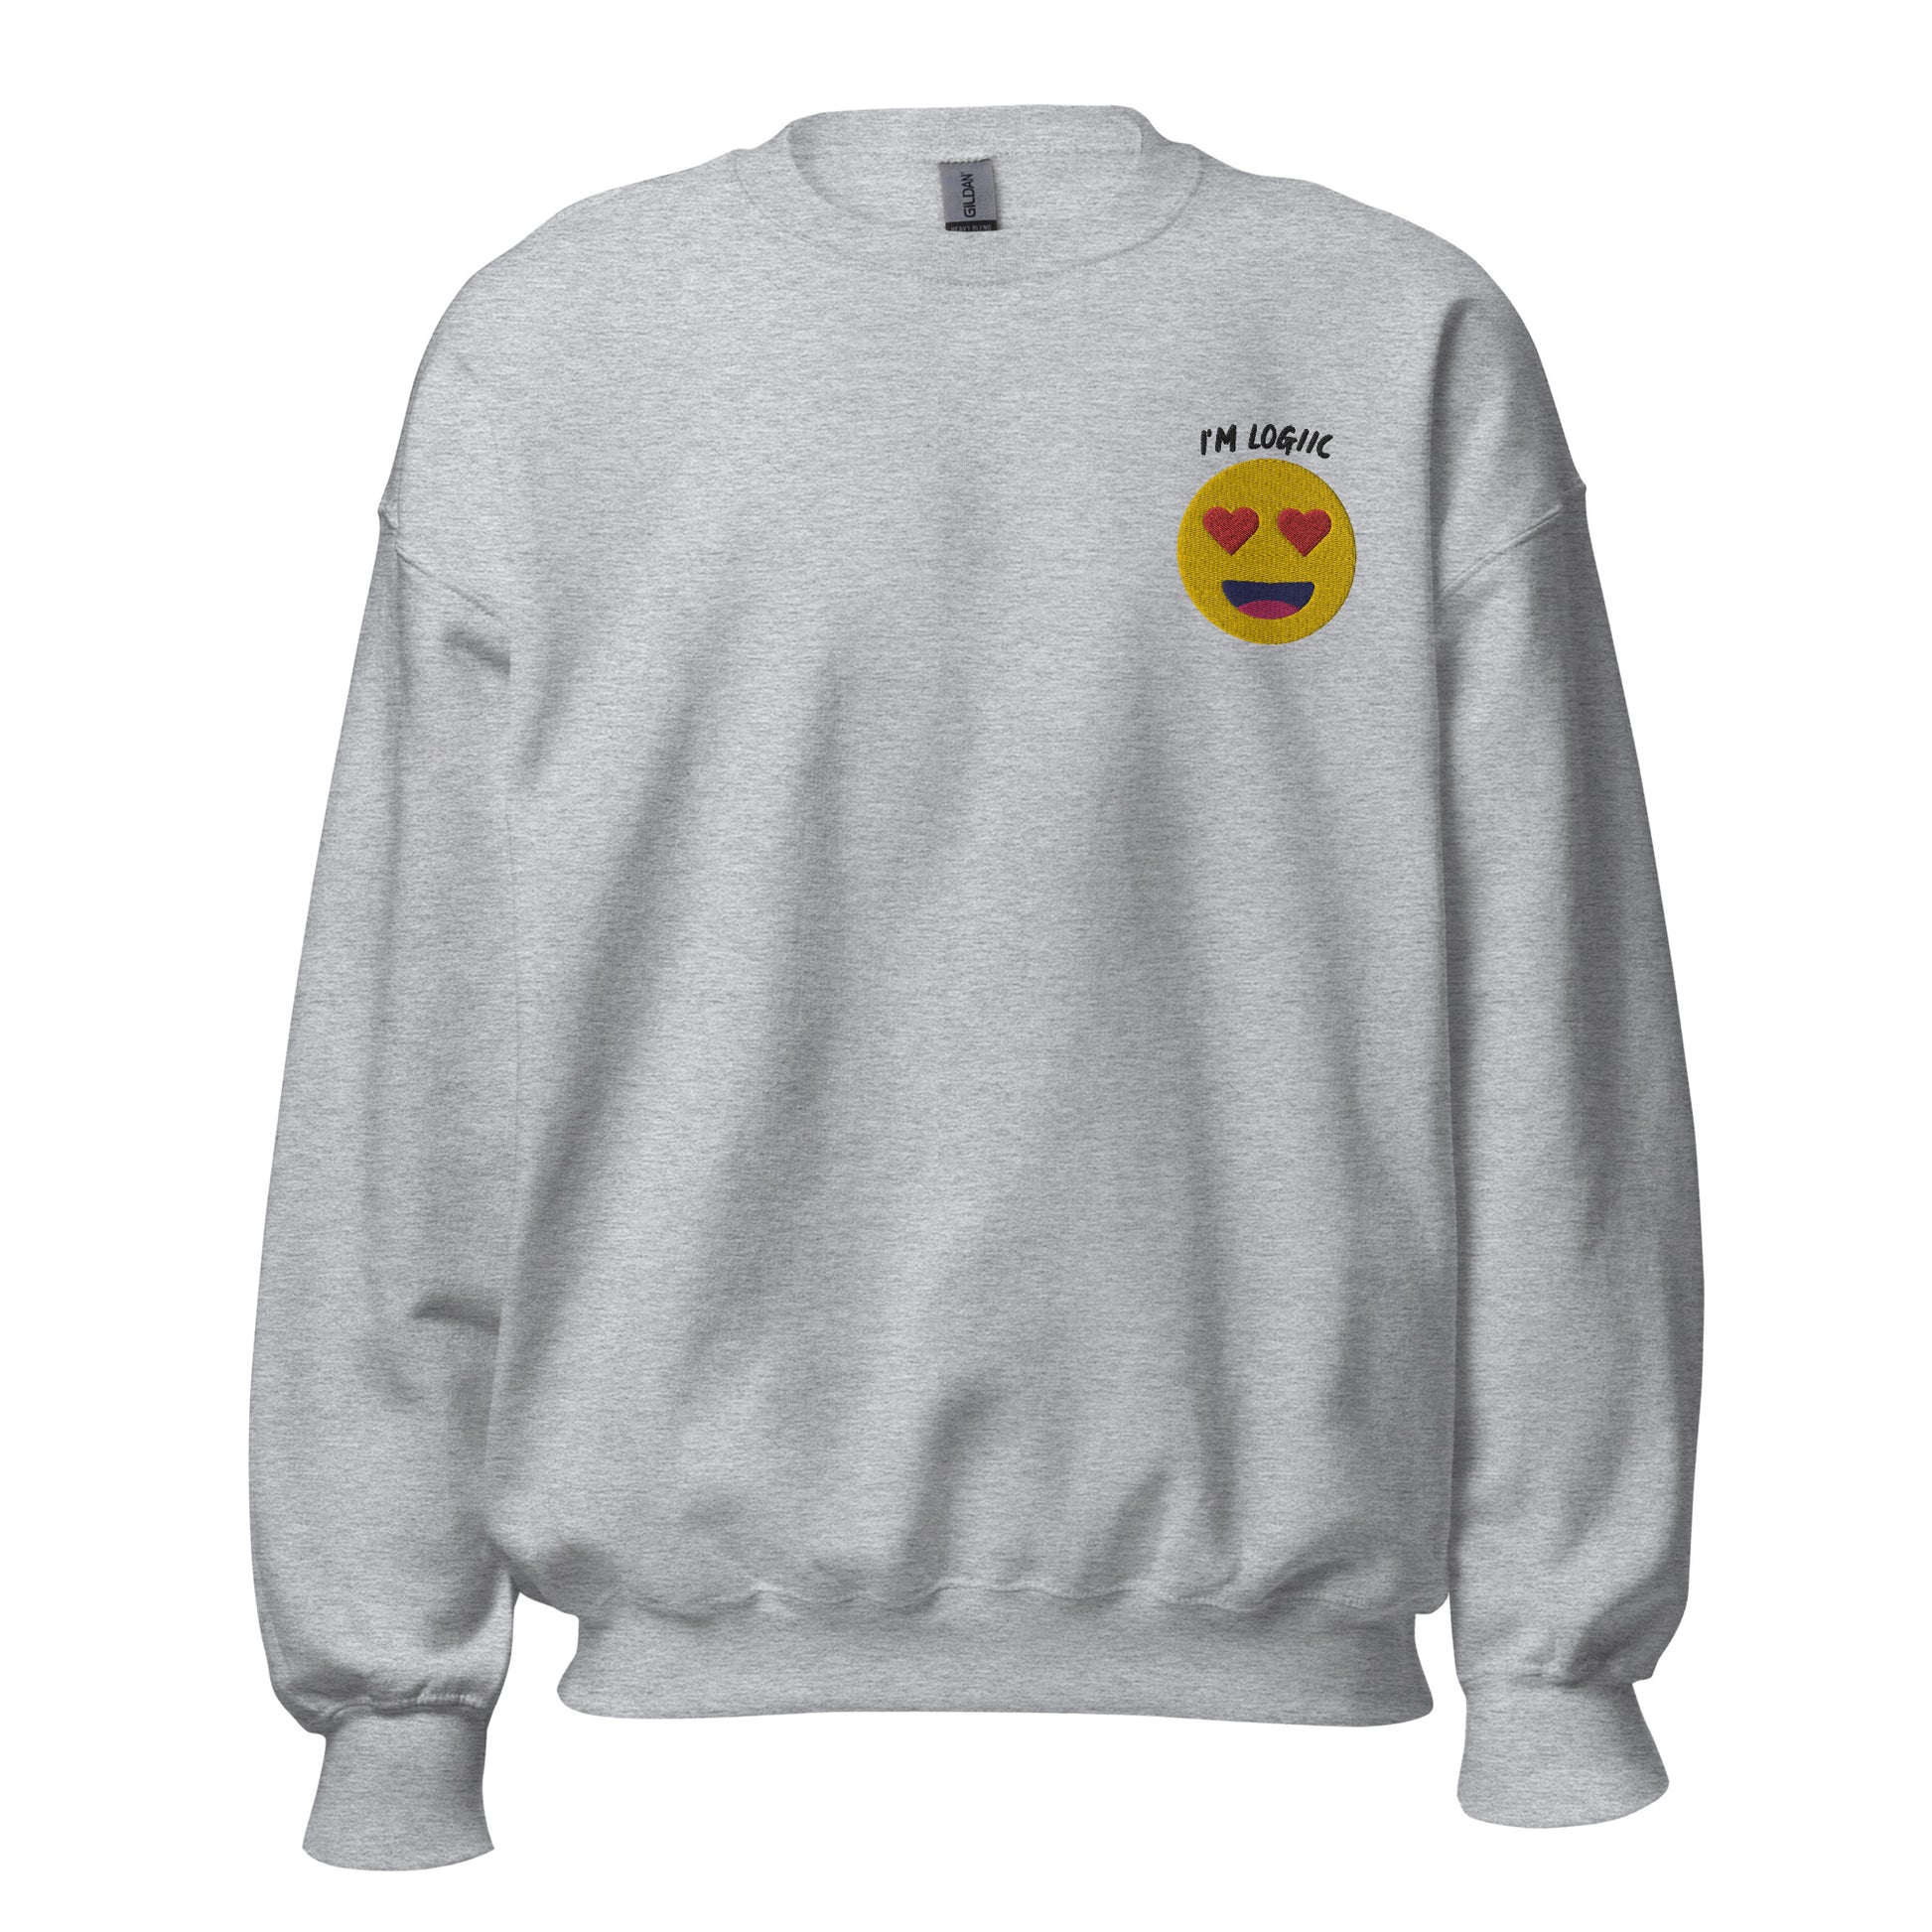 Heart Eyes Emoji Unisex Sweatshirt - Sport Grey / S